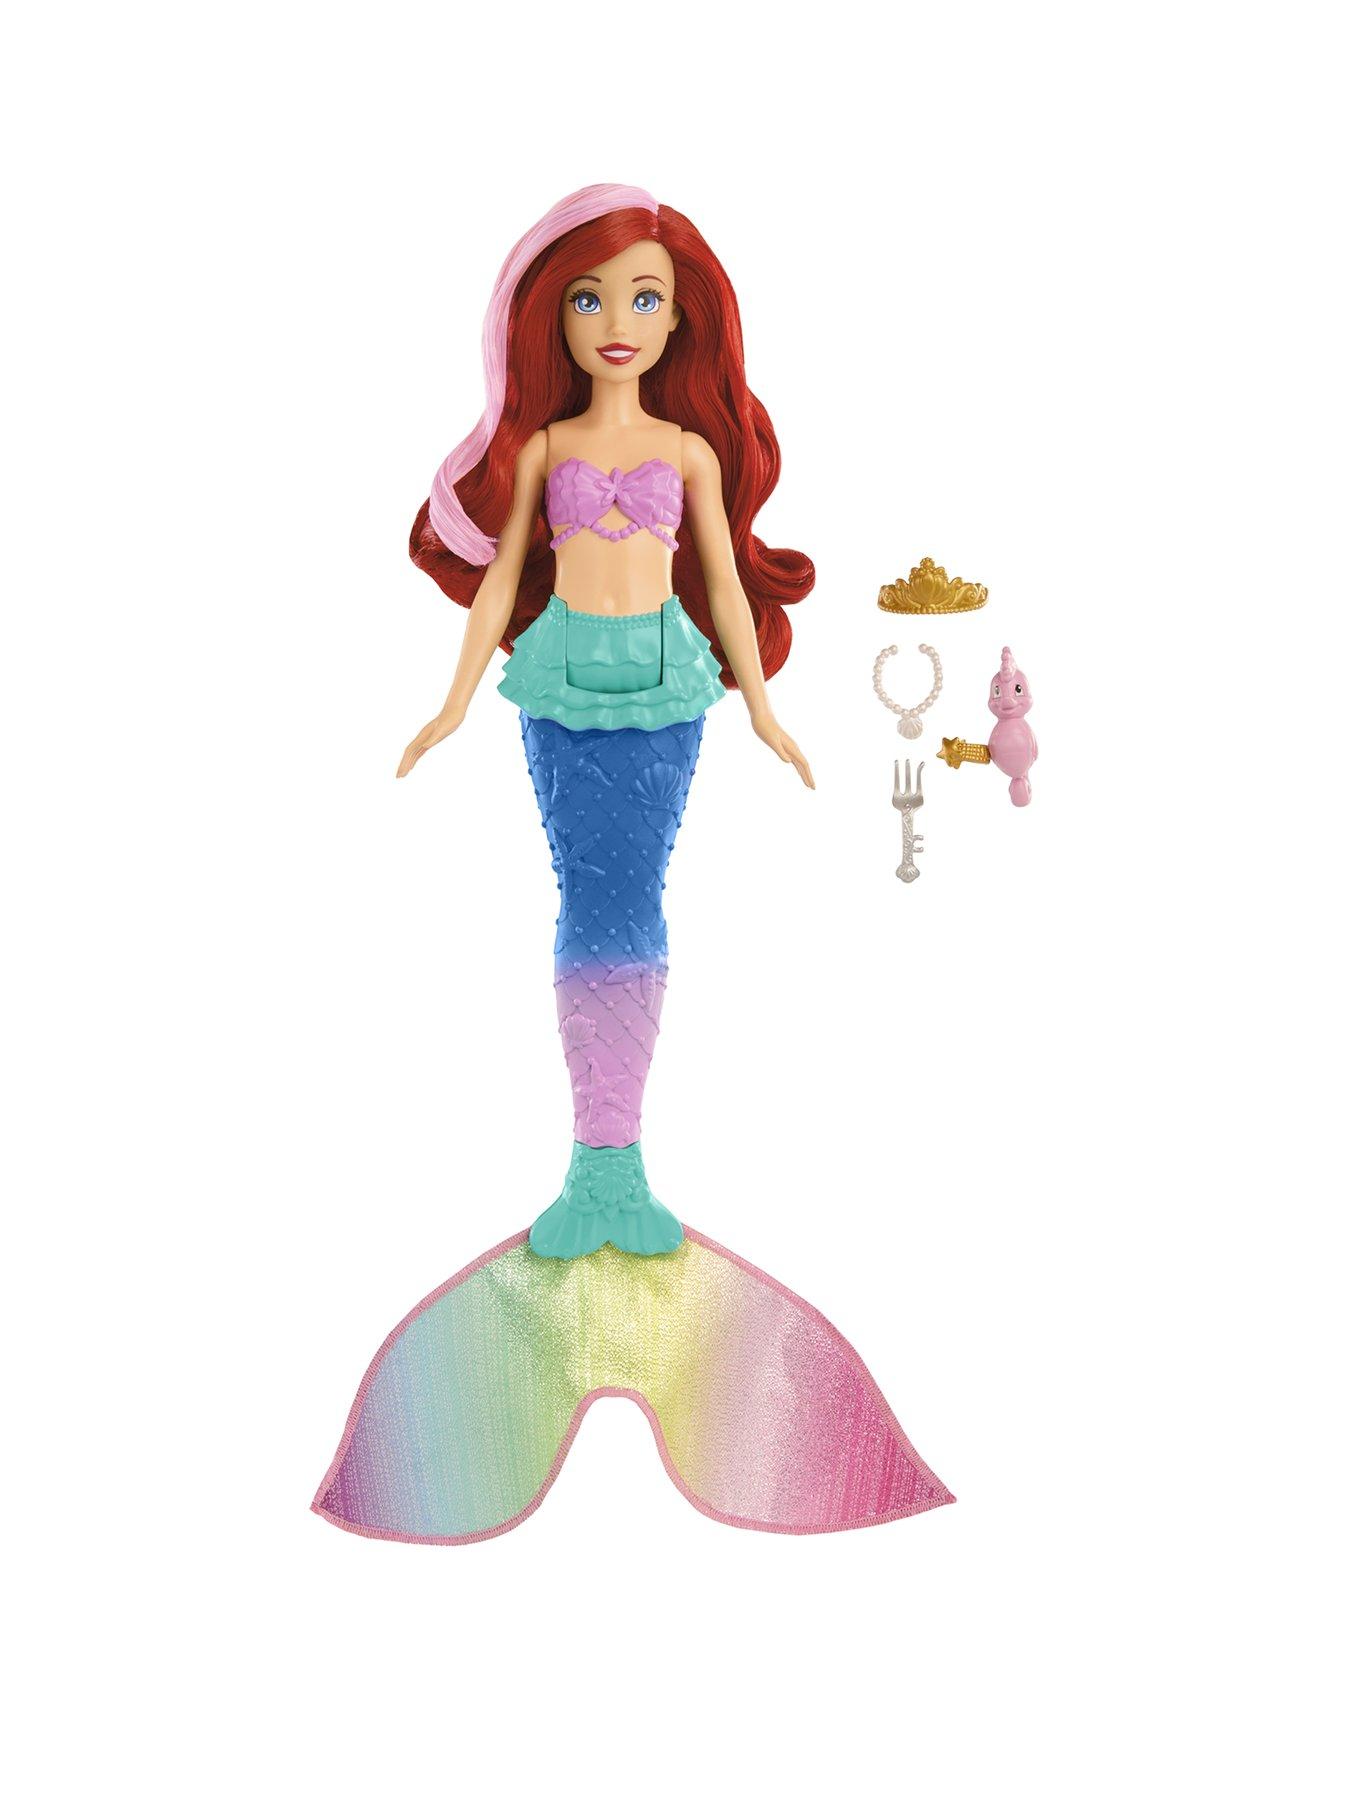 Aqua Beads Aquabeads Nail Studio - Disney Princess